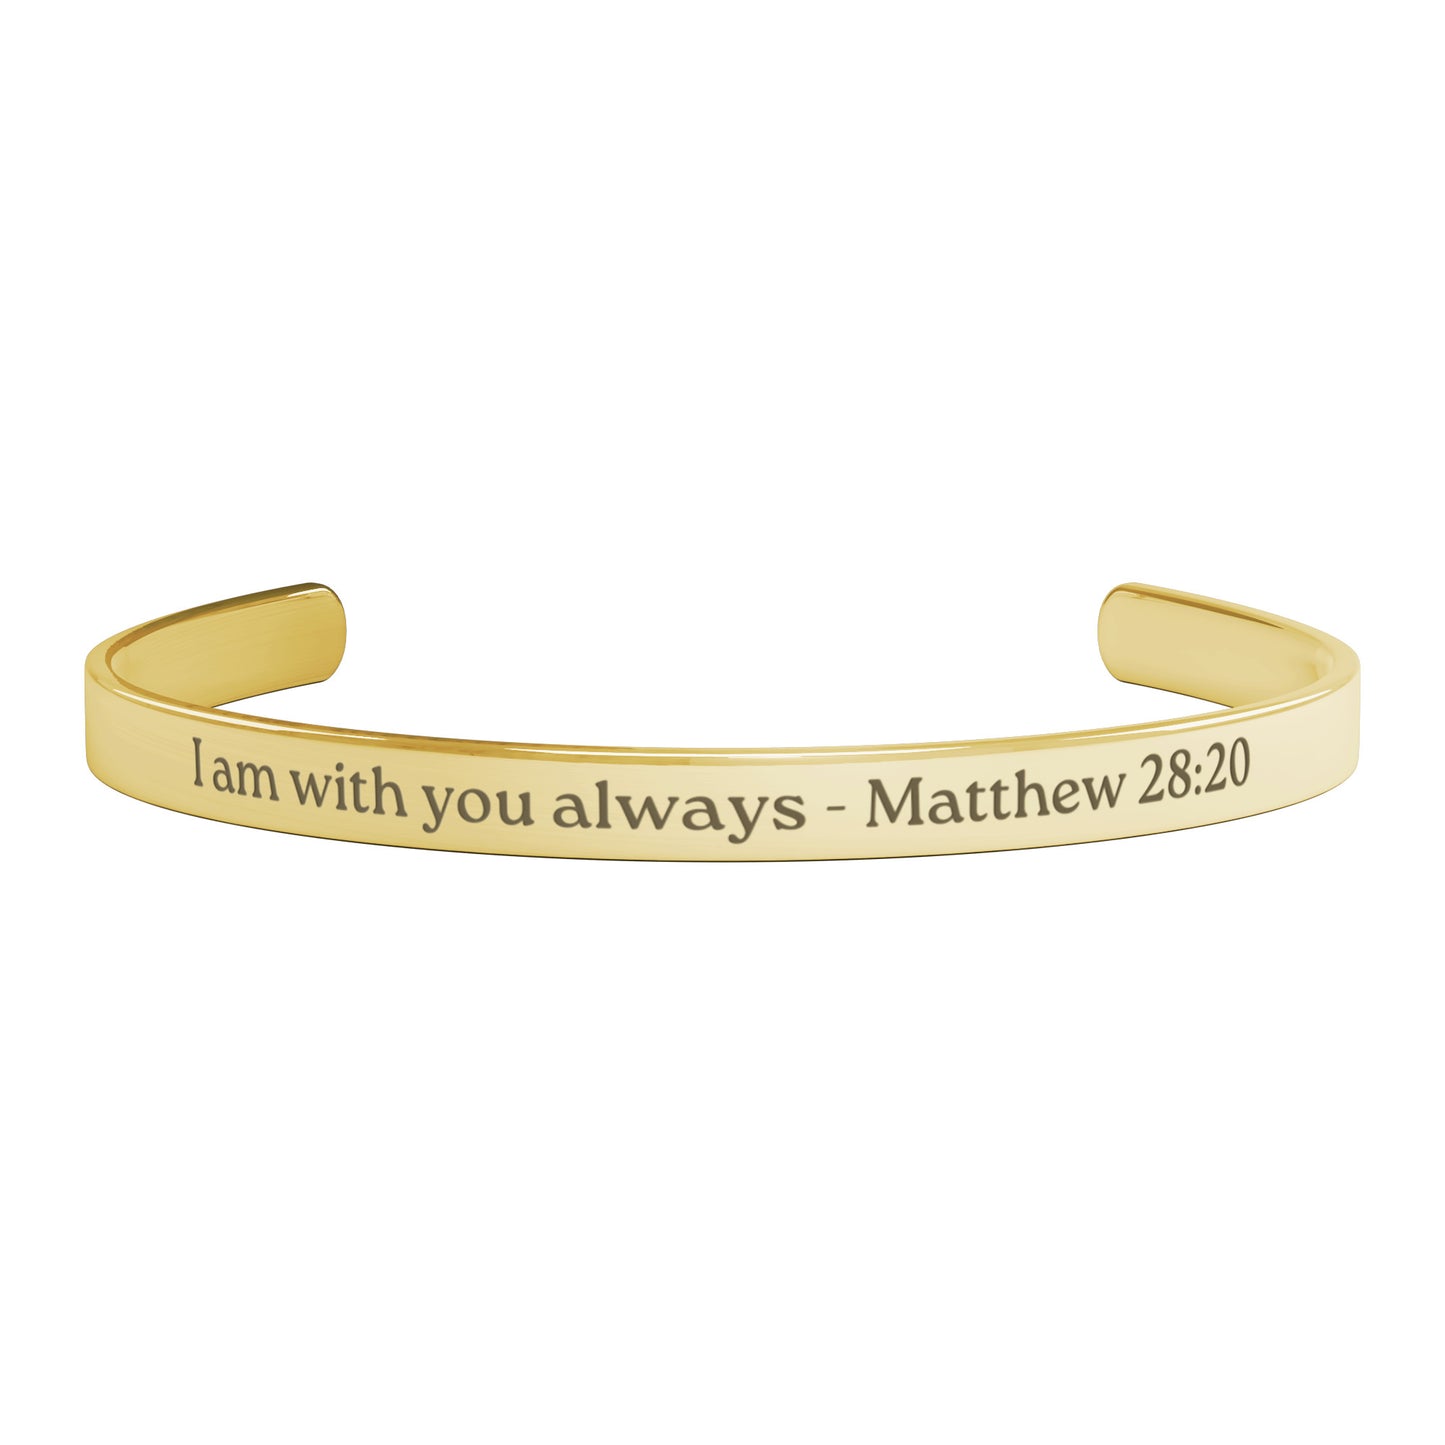 I AM WITH YOU ALWAYS - MATTHEW 28:20